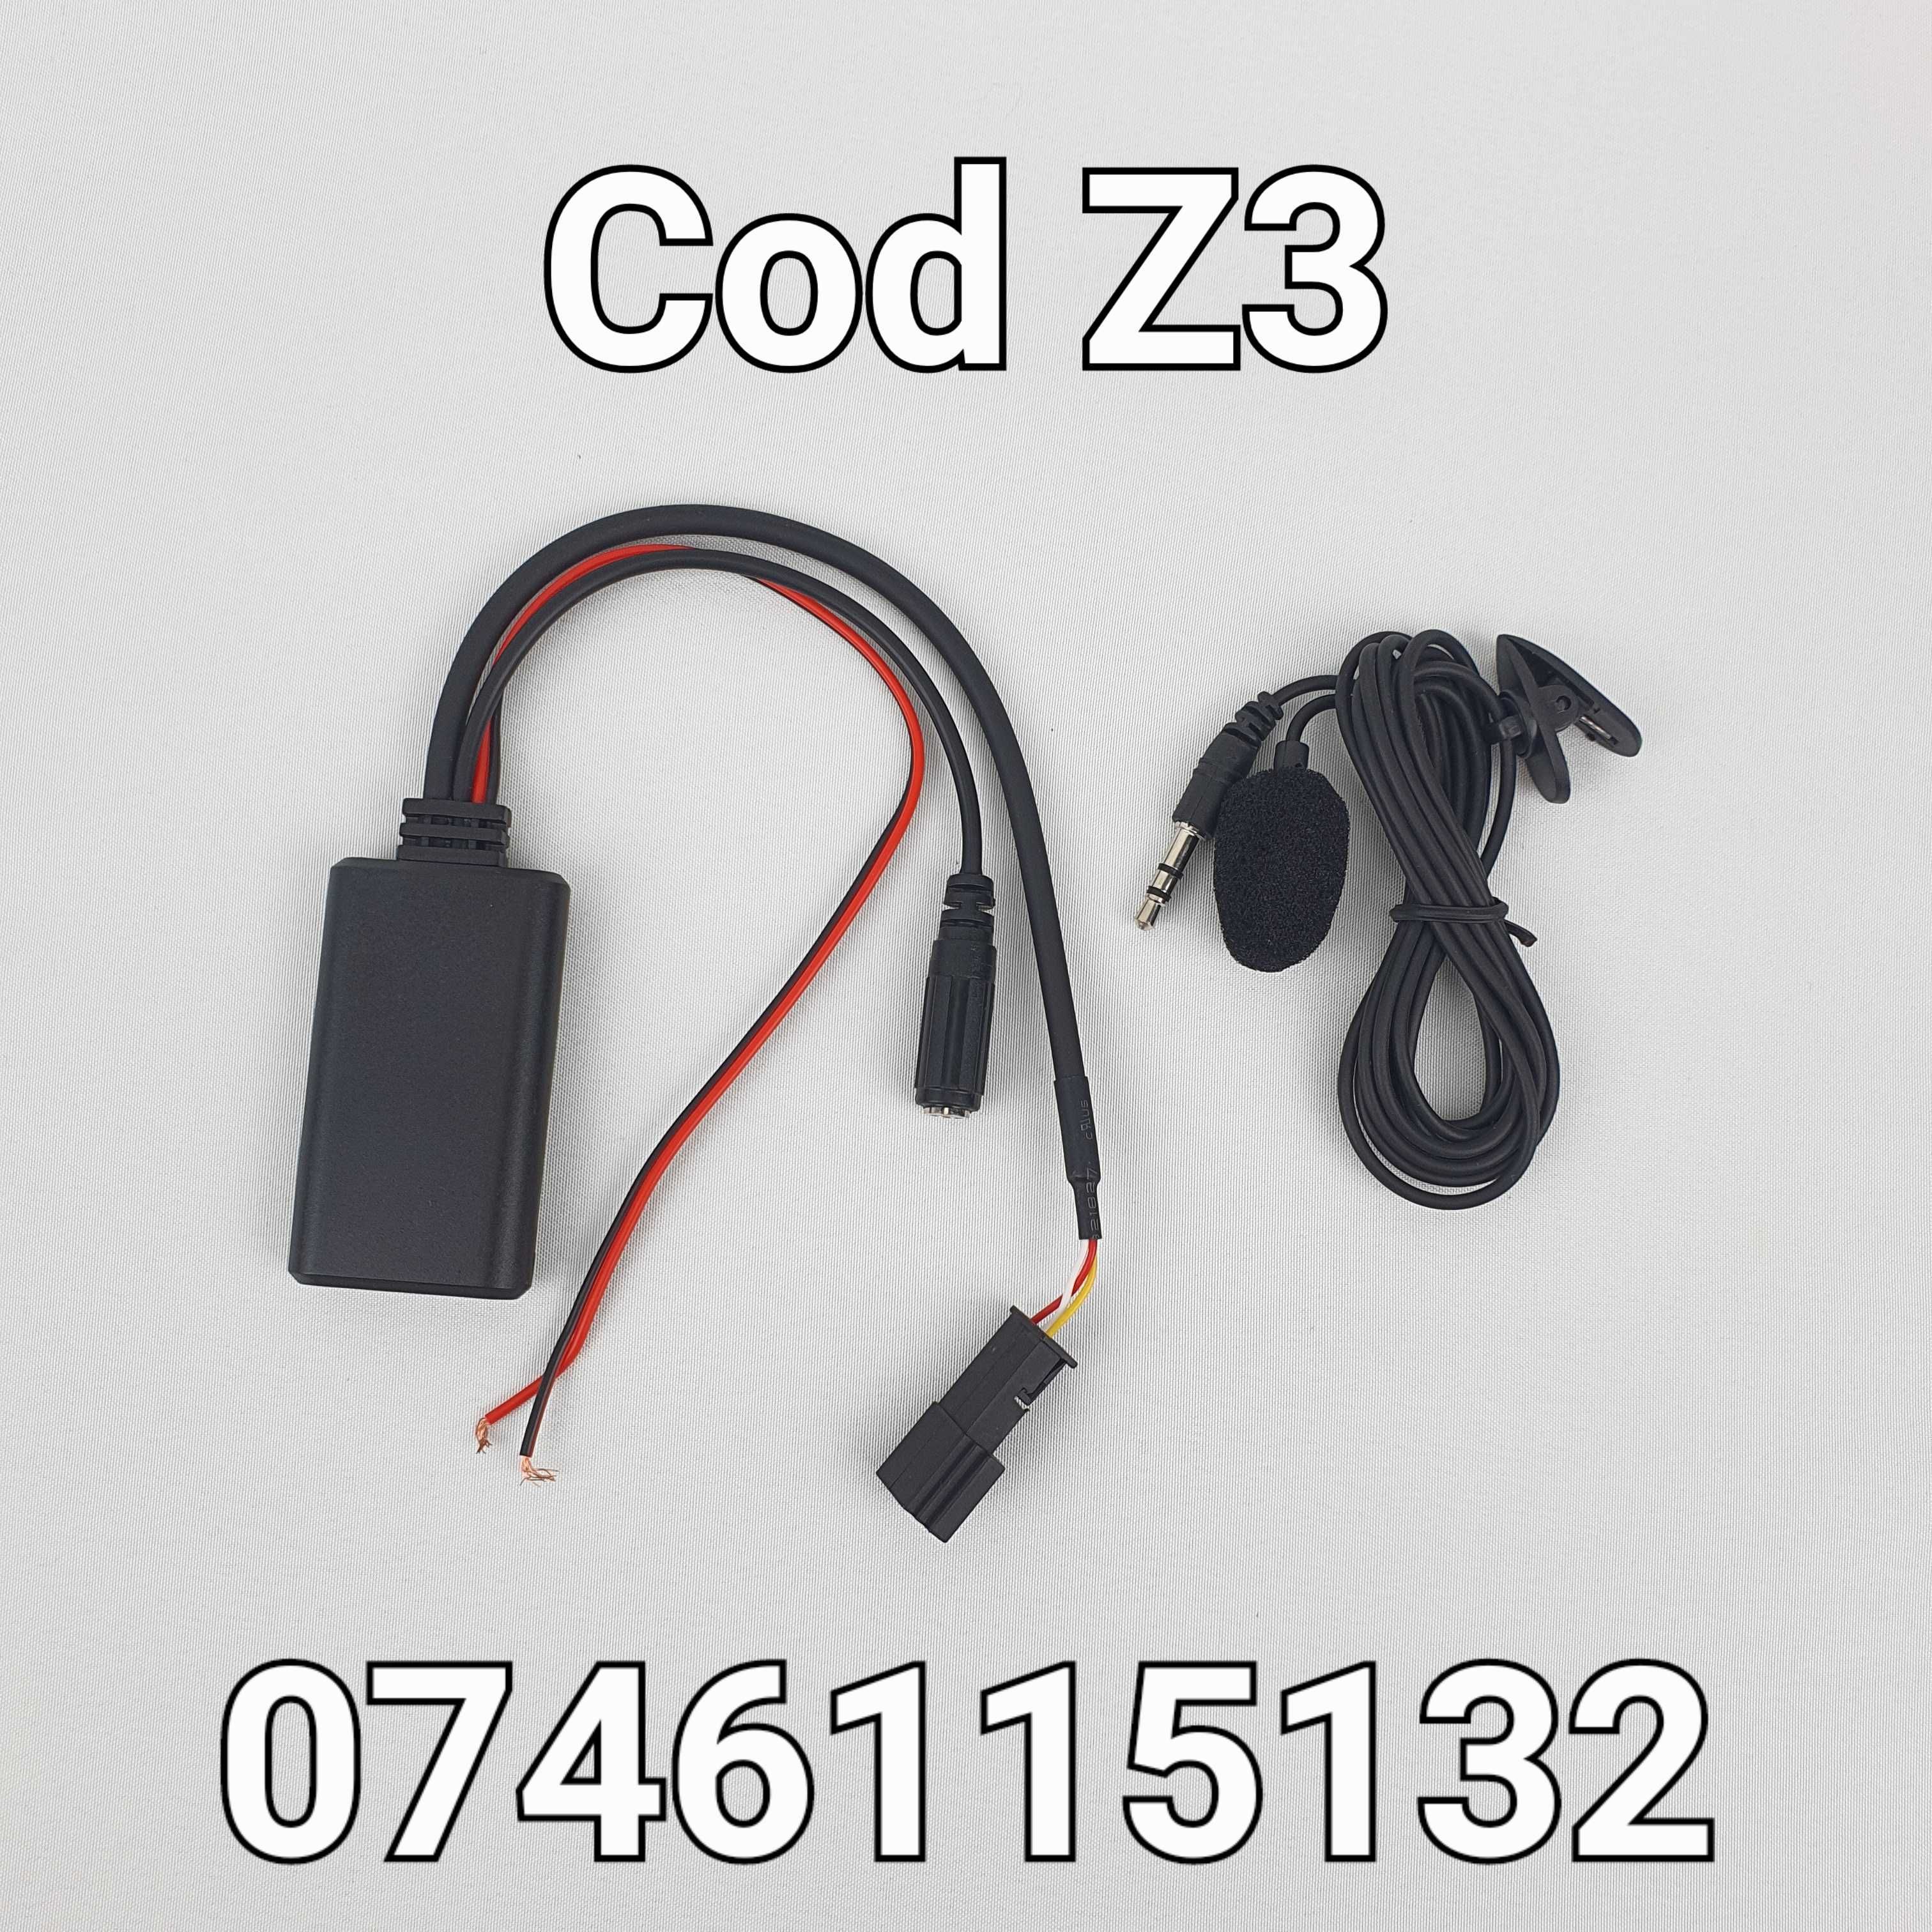 Cablu Auxiliar-CAR KIT-Adaptor Aux-Modul Bluetooth BMW E39 E46 E53 -Z3